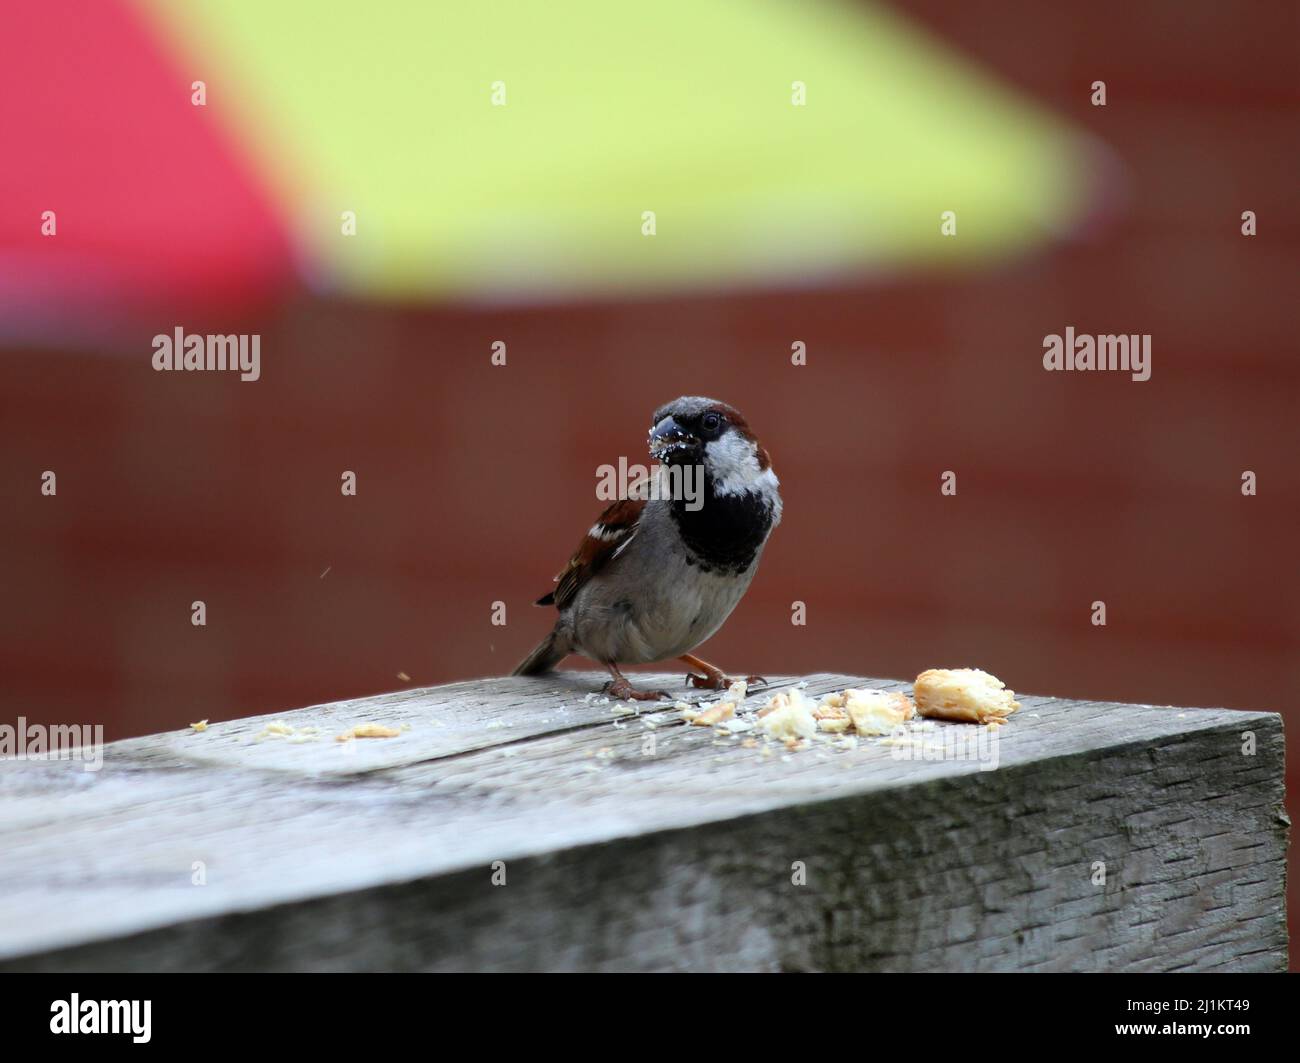 Sparrow eating bread crumbs in a garden Stock Photo